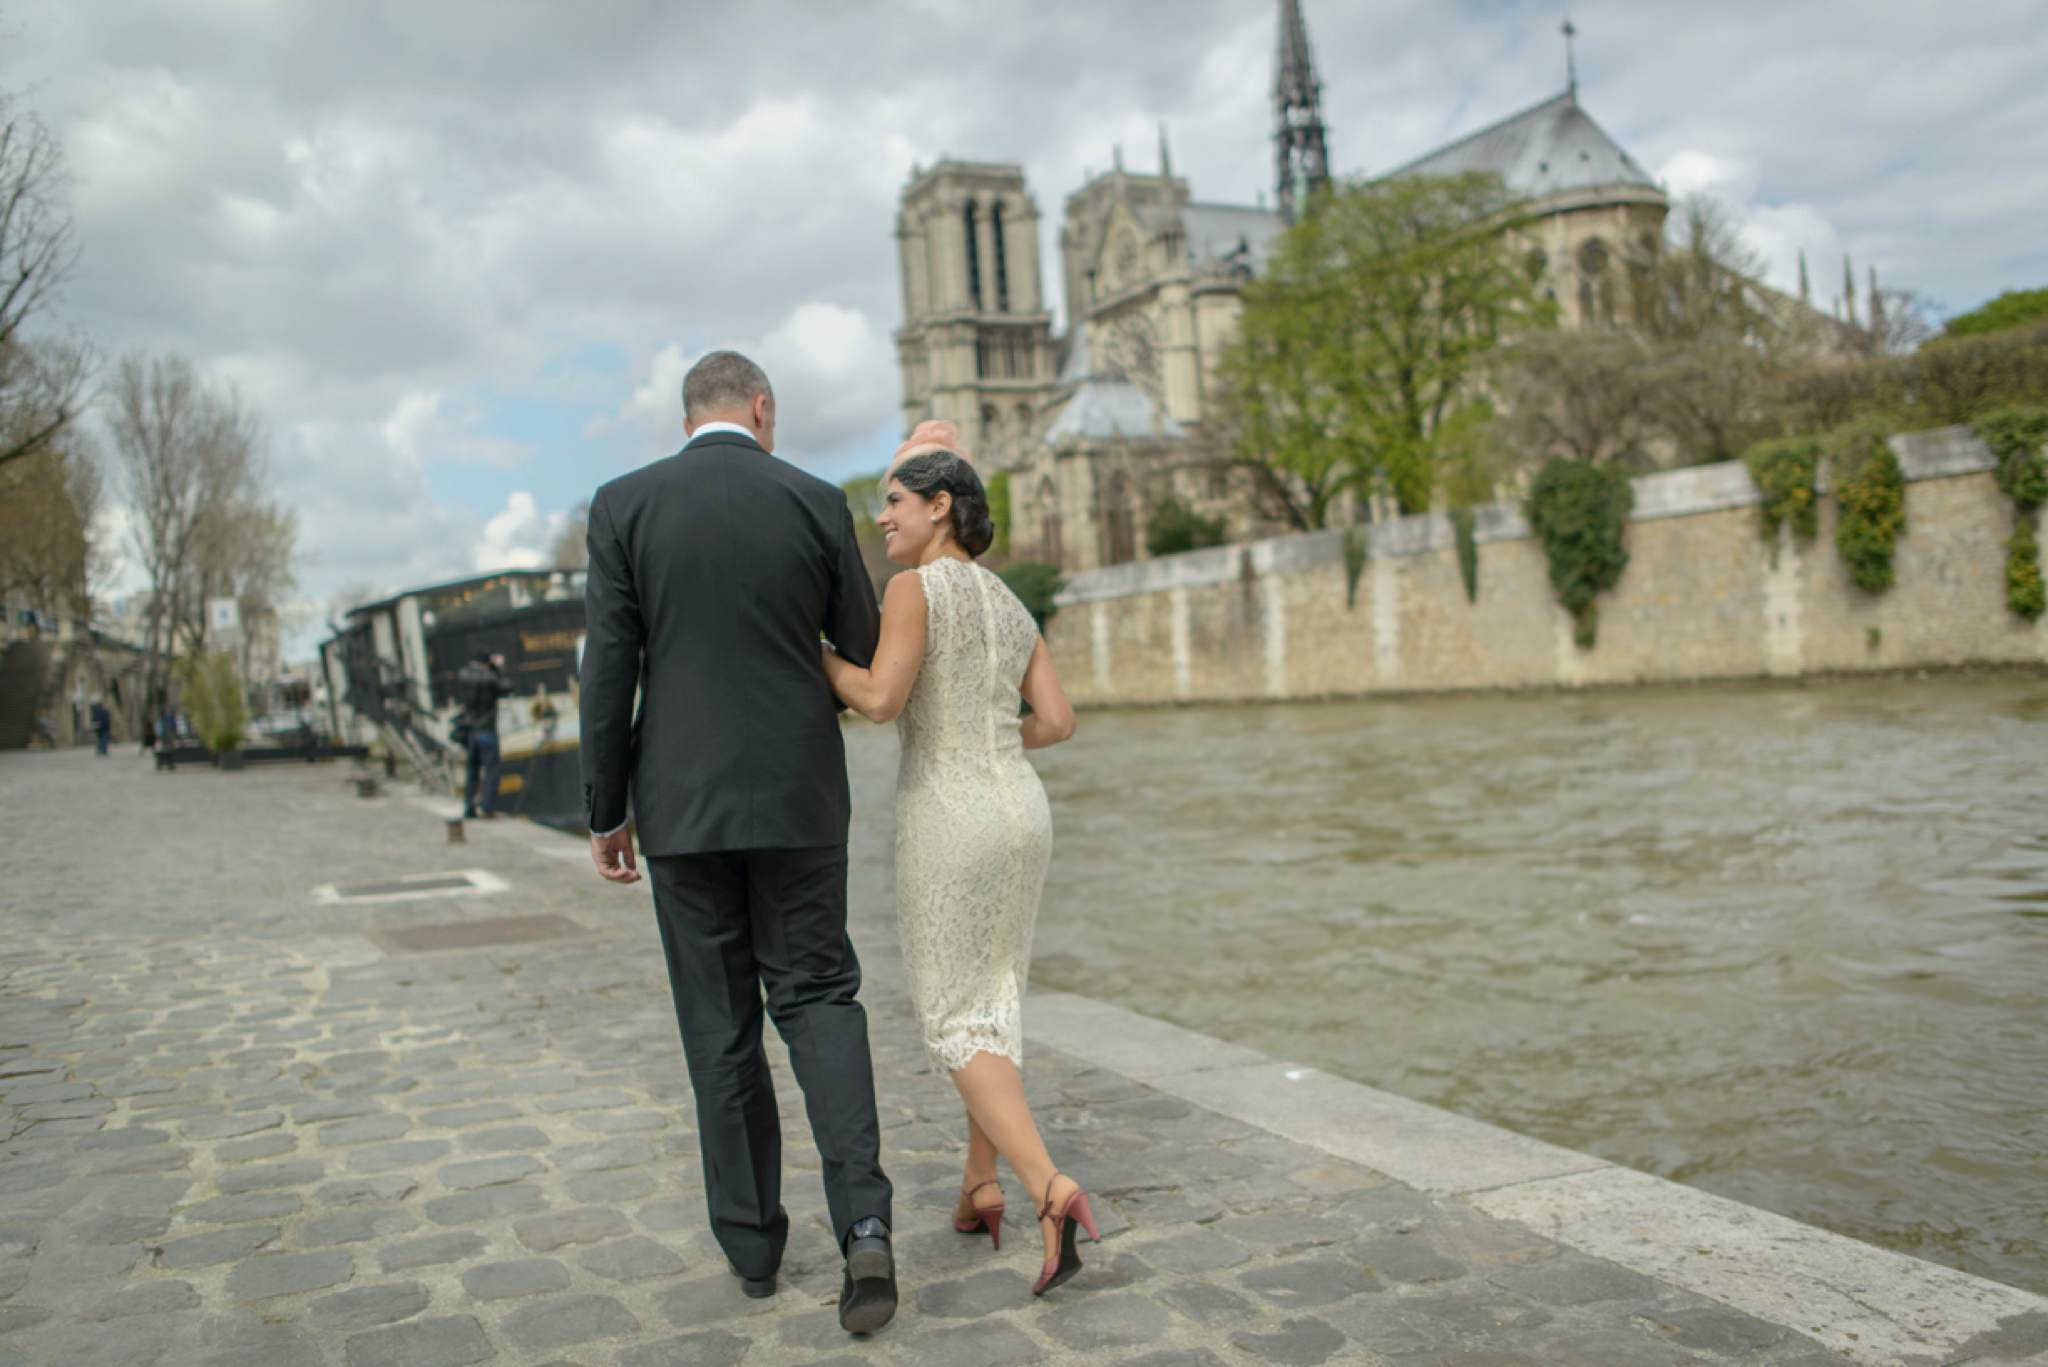 Kara and Bradley – Elopment wedding / Mariage intimiste à Paris